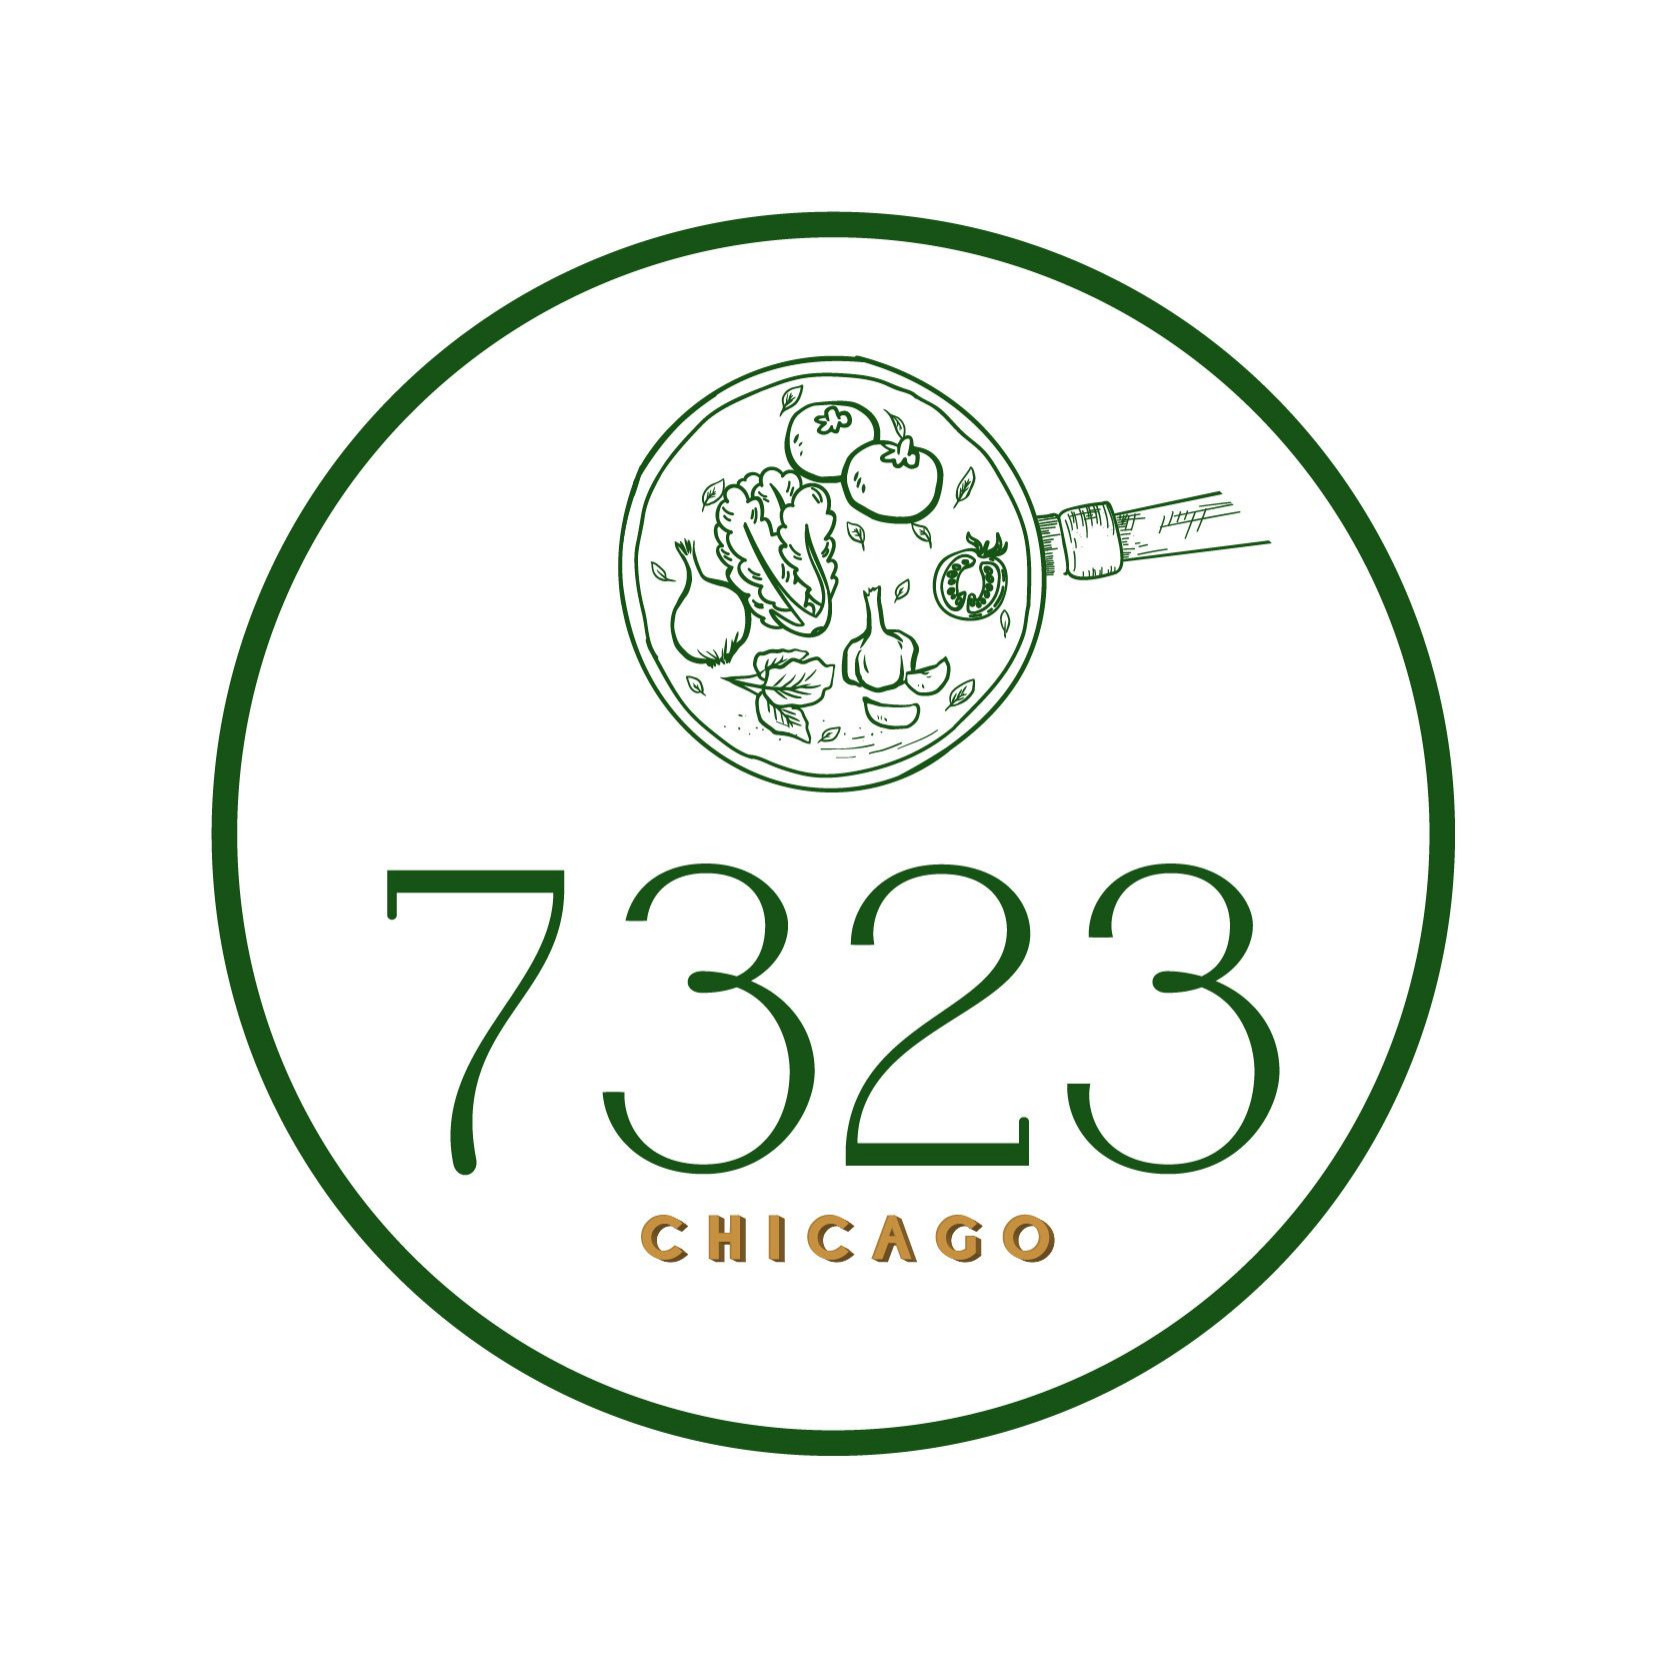 7323 Chicago